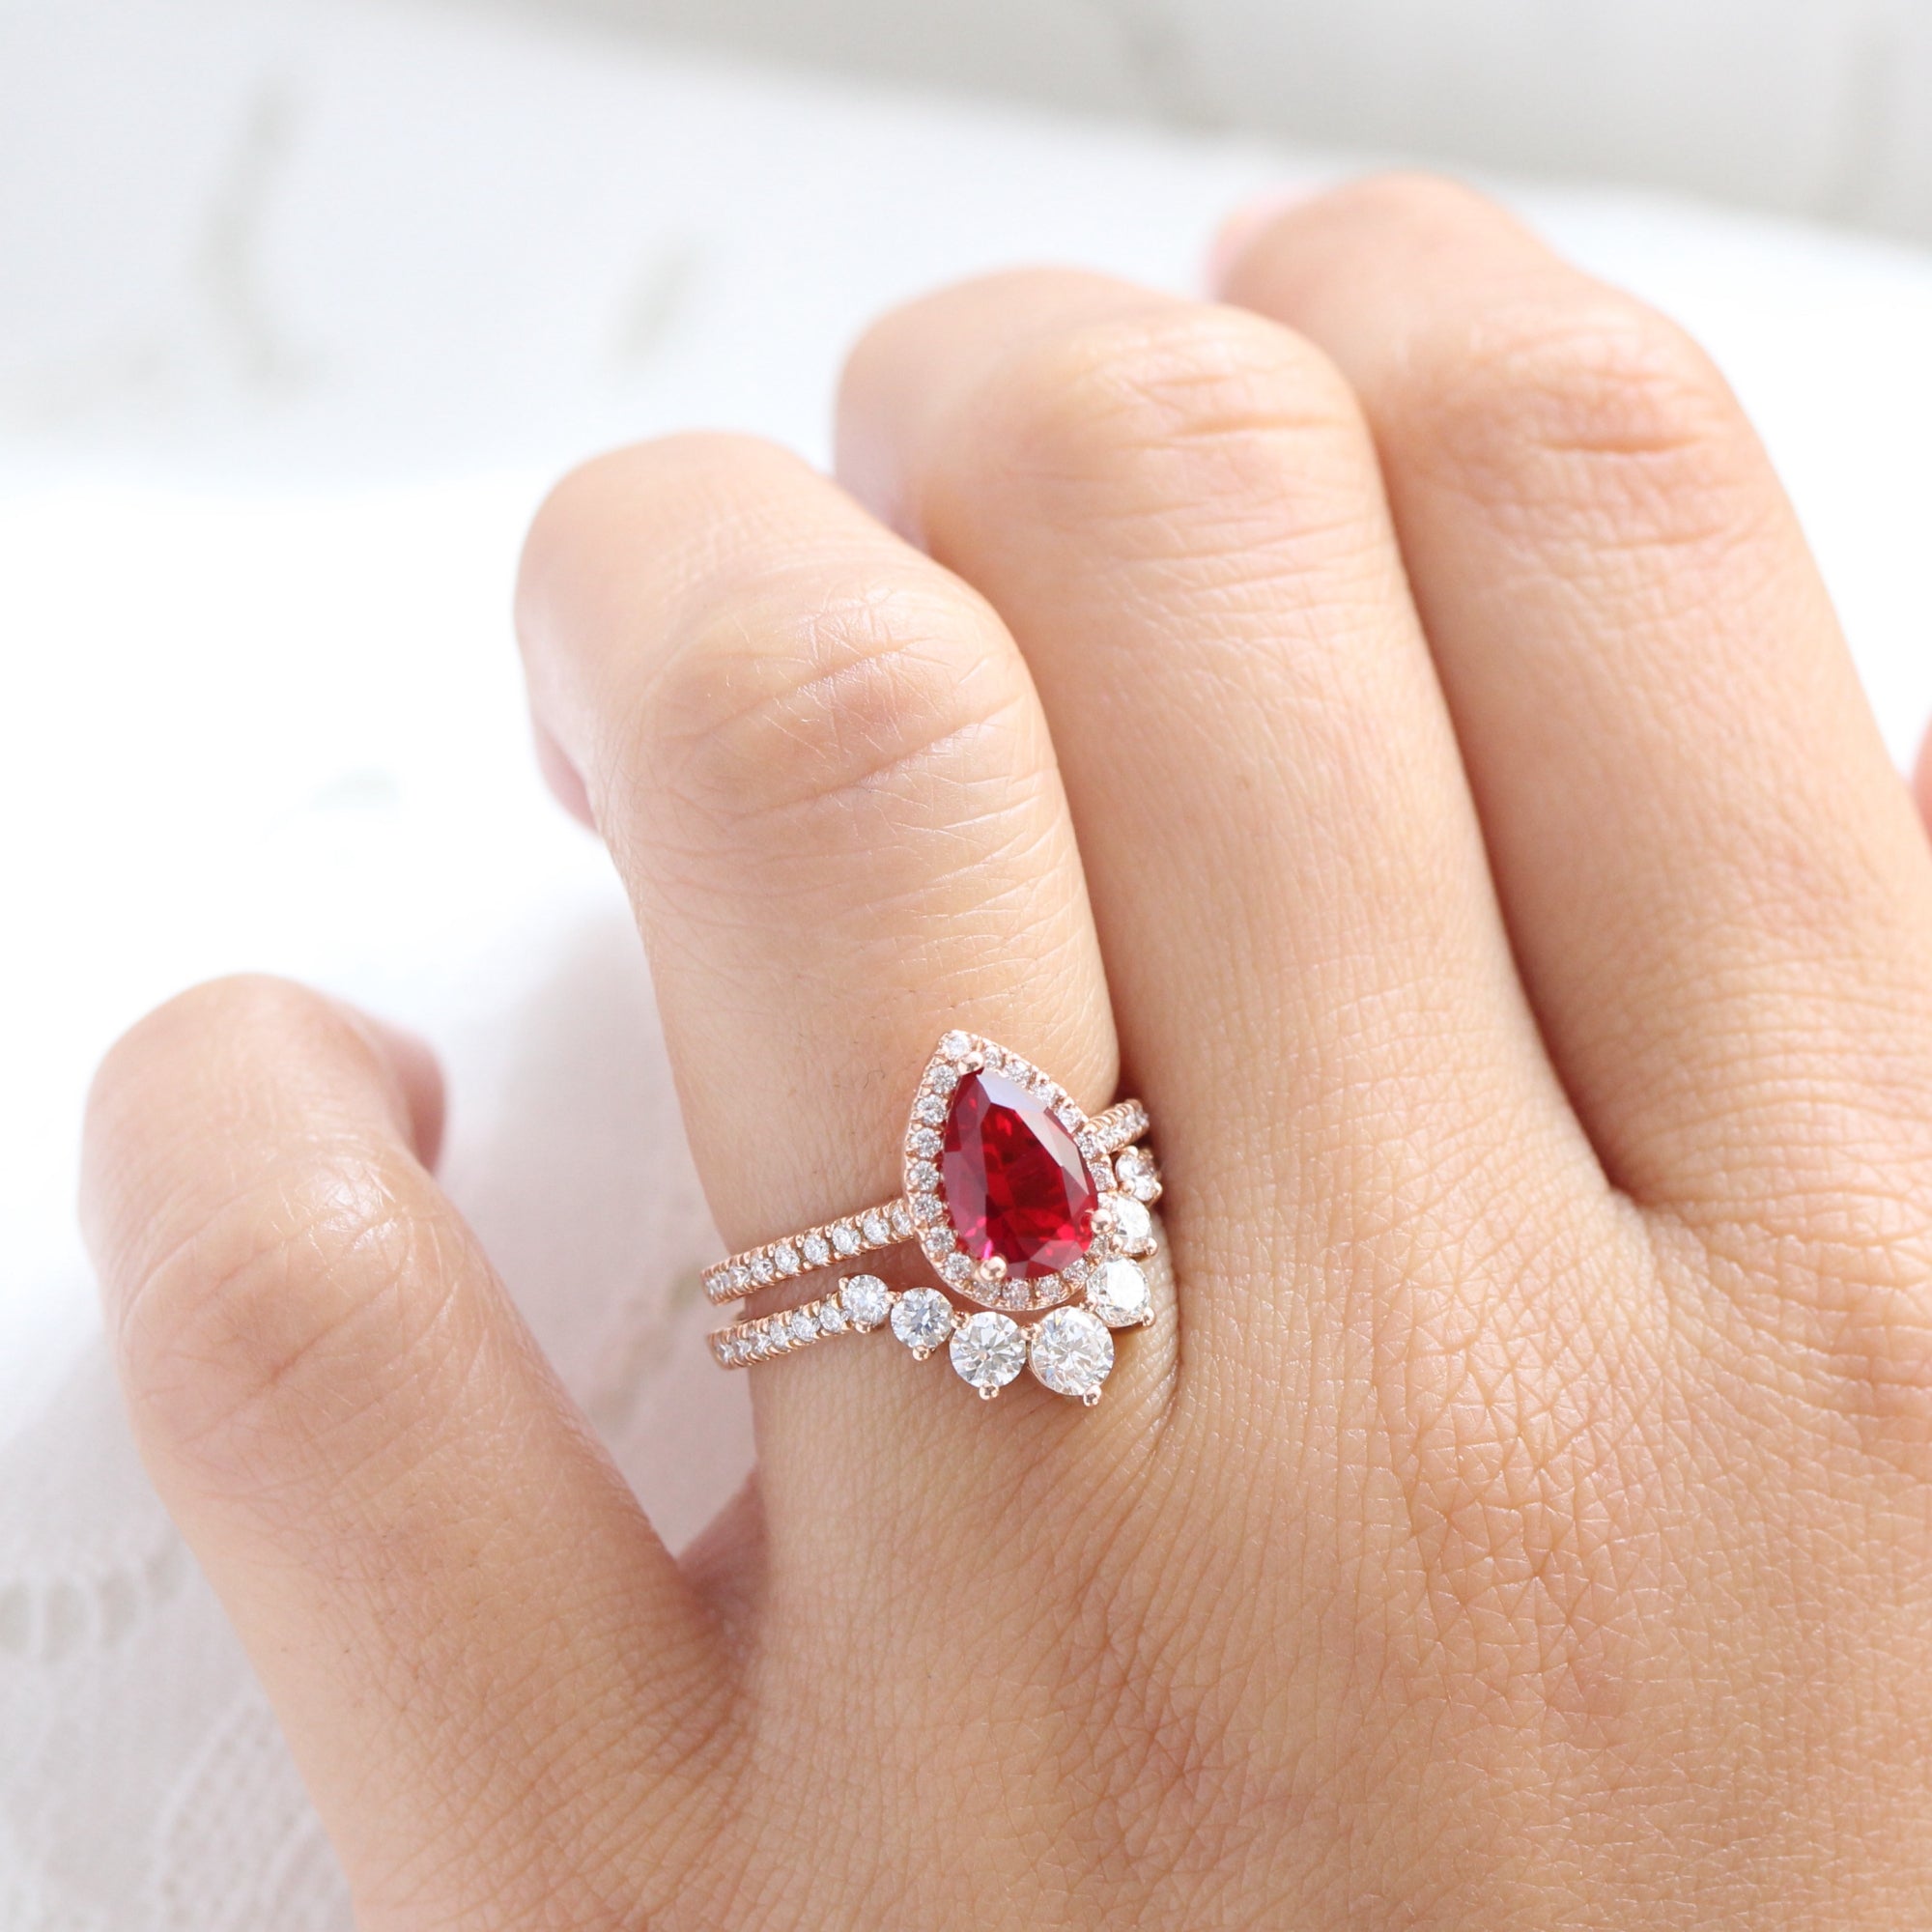 18ct White Gold Pear Cut Ruby Diamond Ring | Cerrone Jewellers